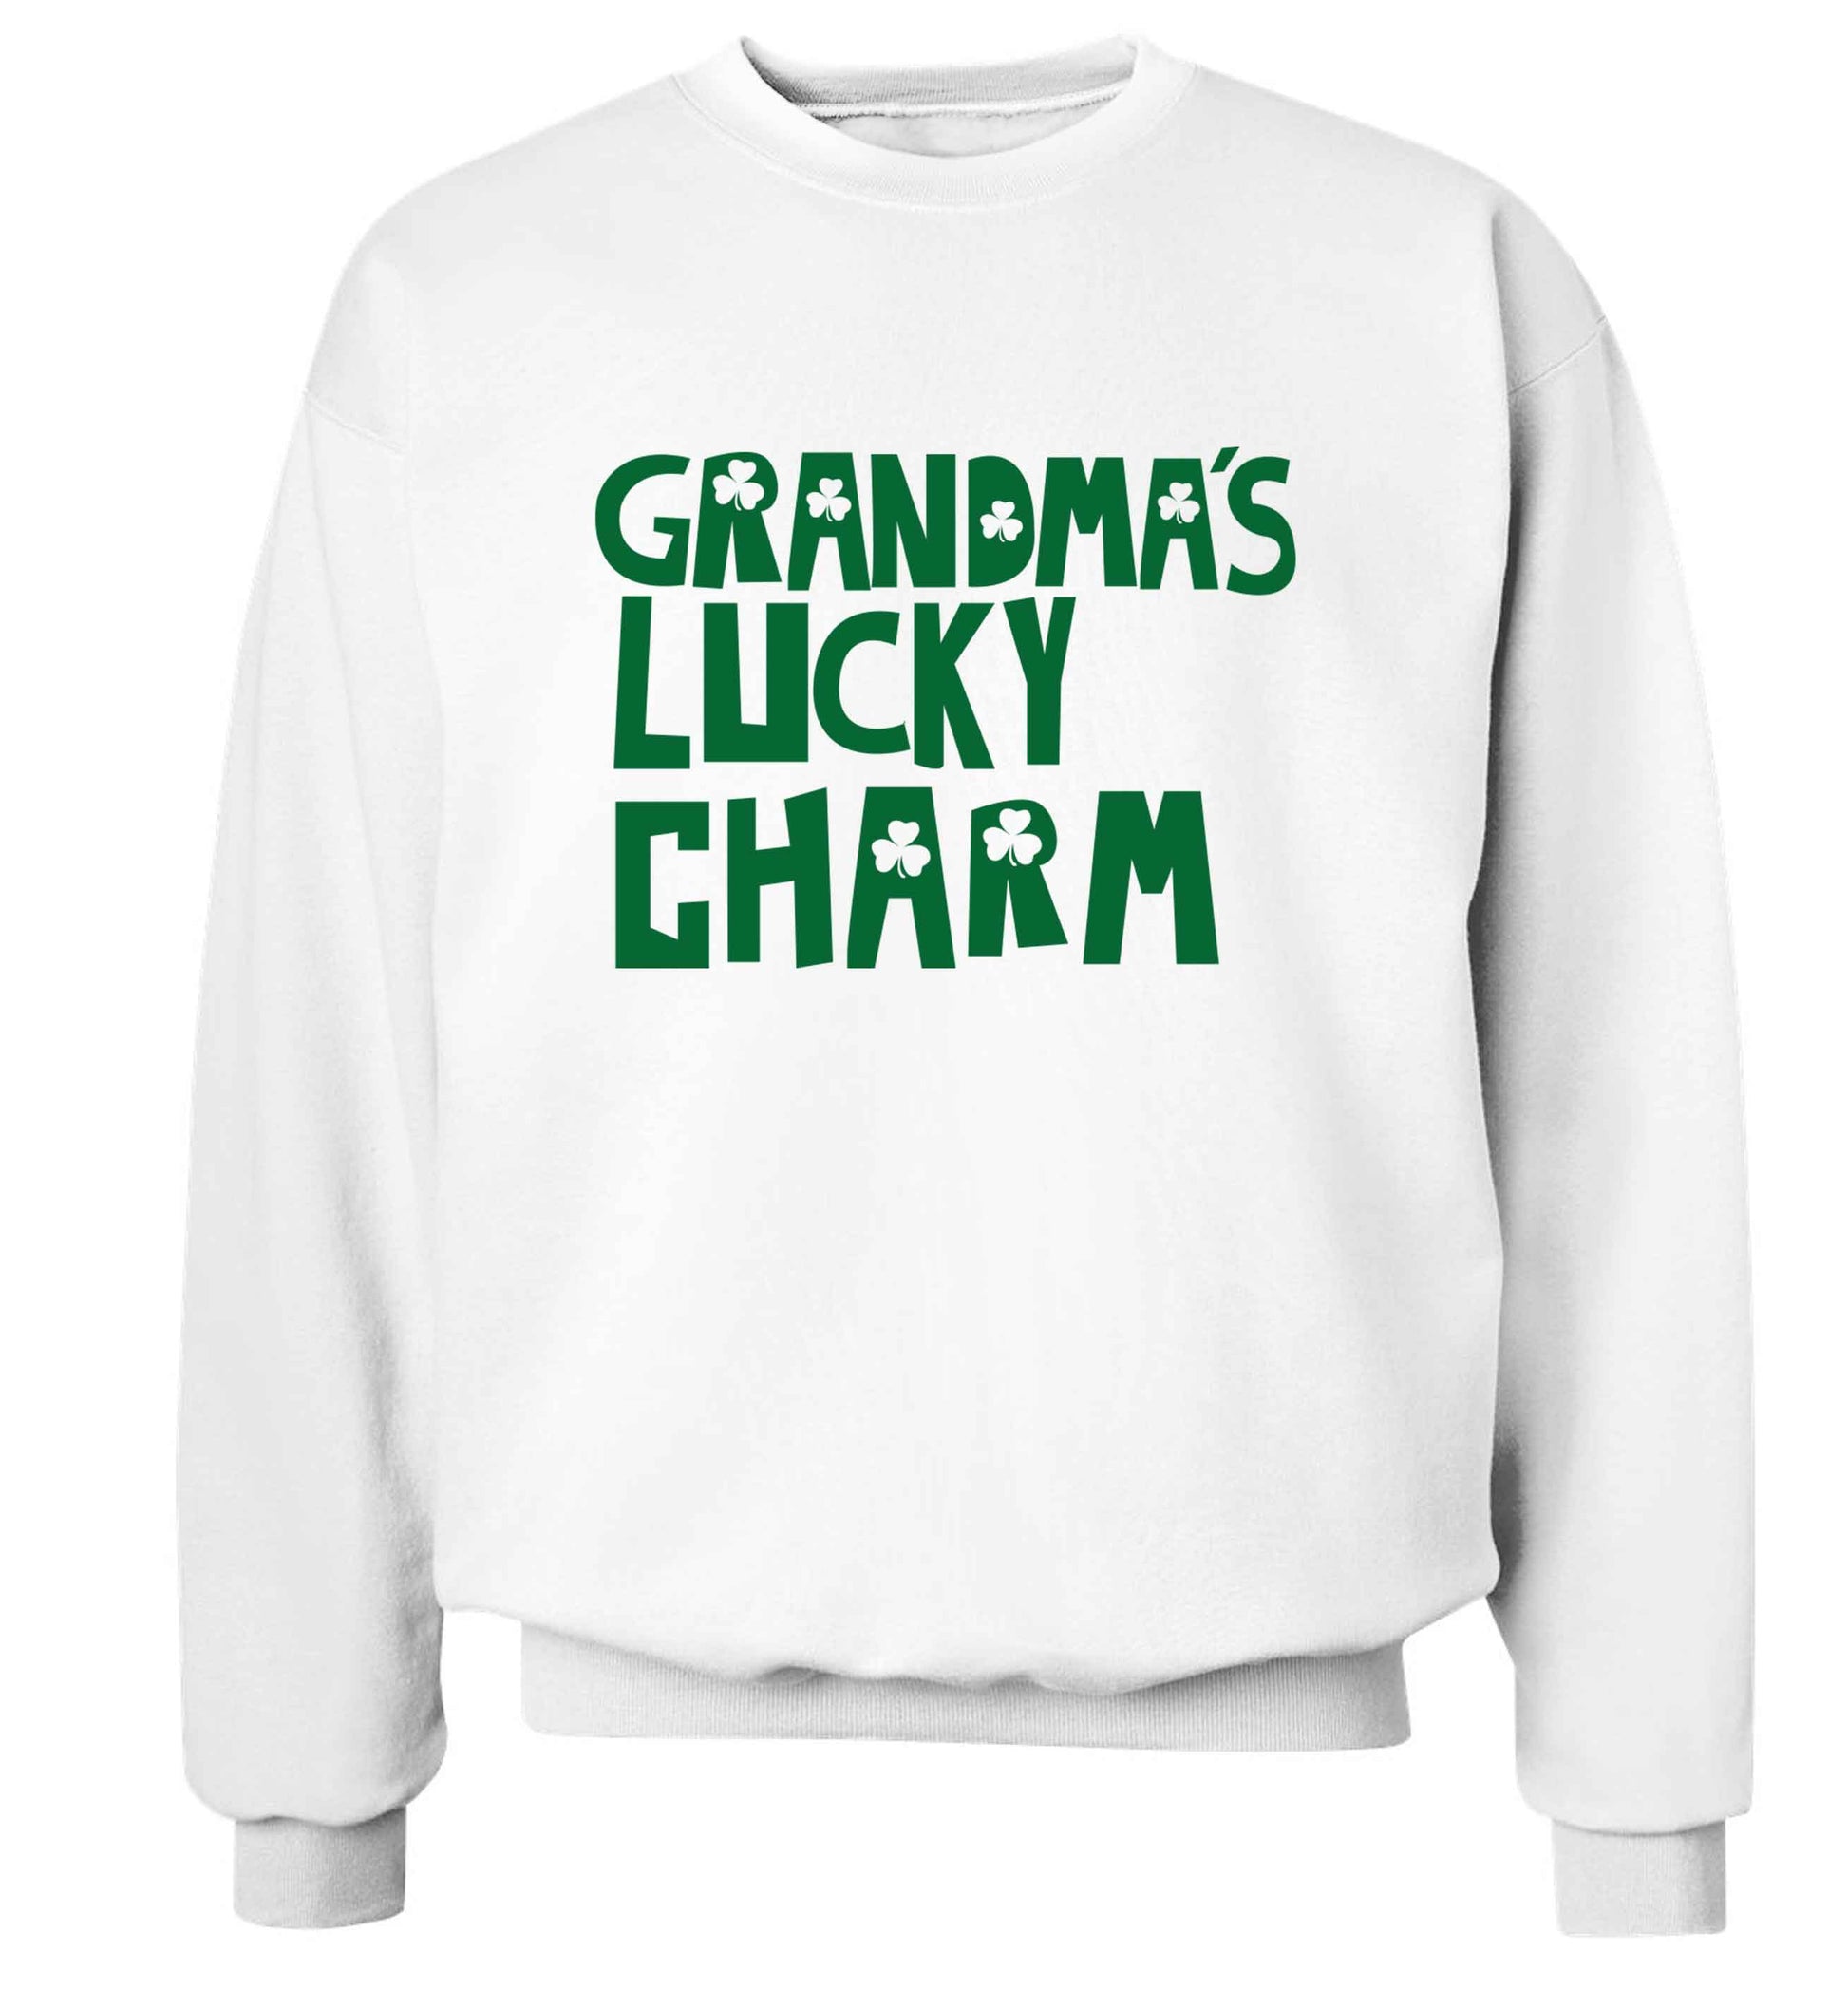 Grandma's lucky charm adult's unisex white sweater 2XL